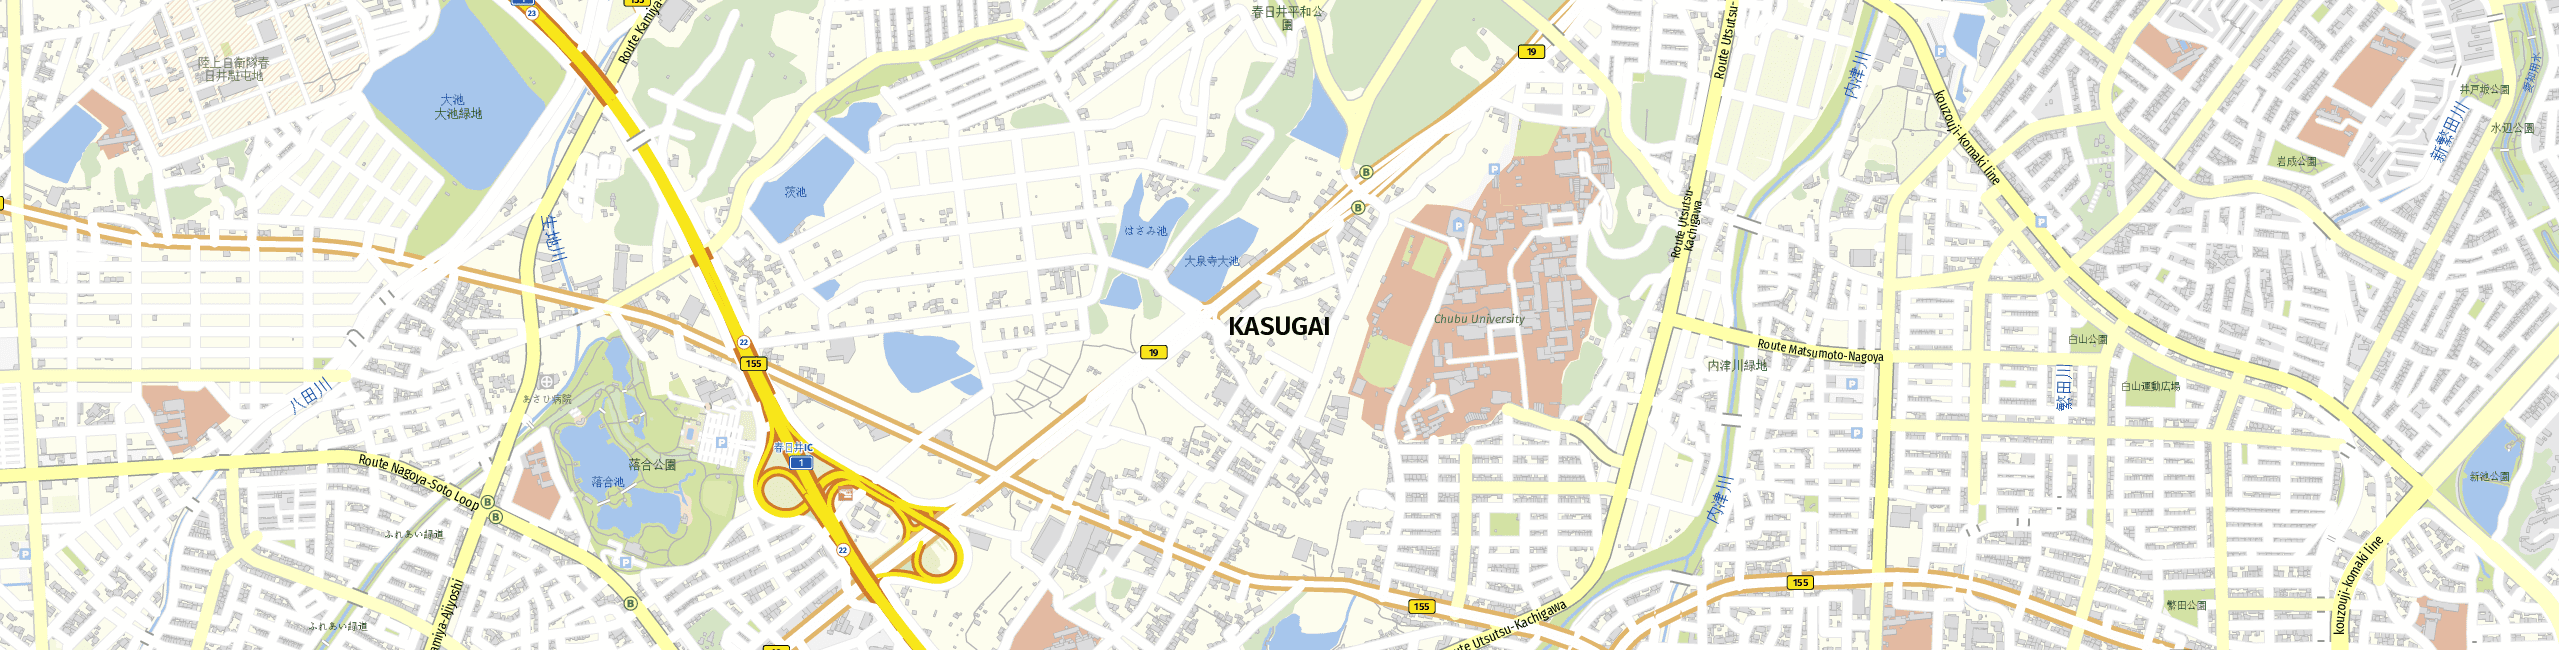 Stadtplan Kasugai zum Downloaden.